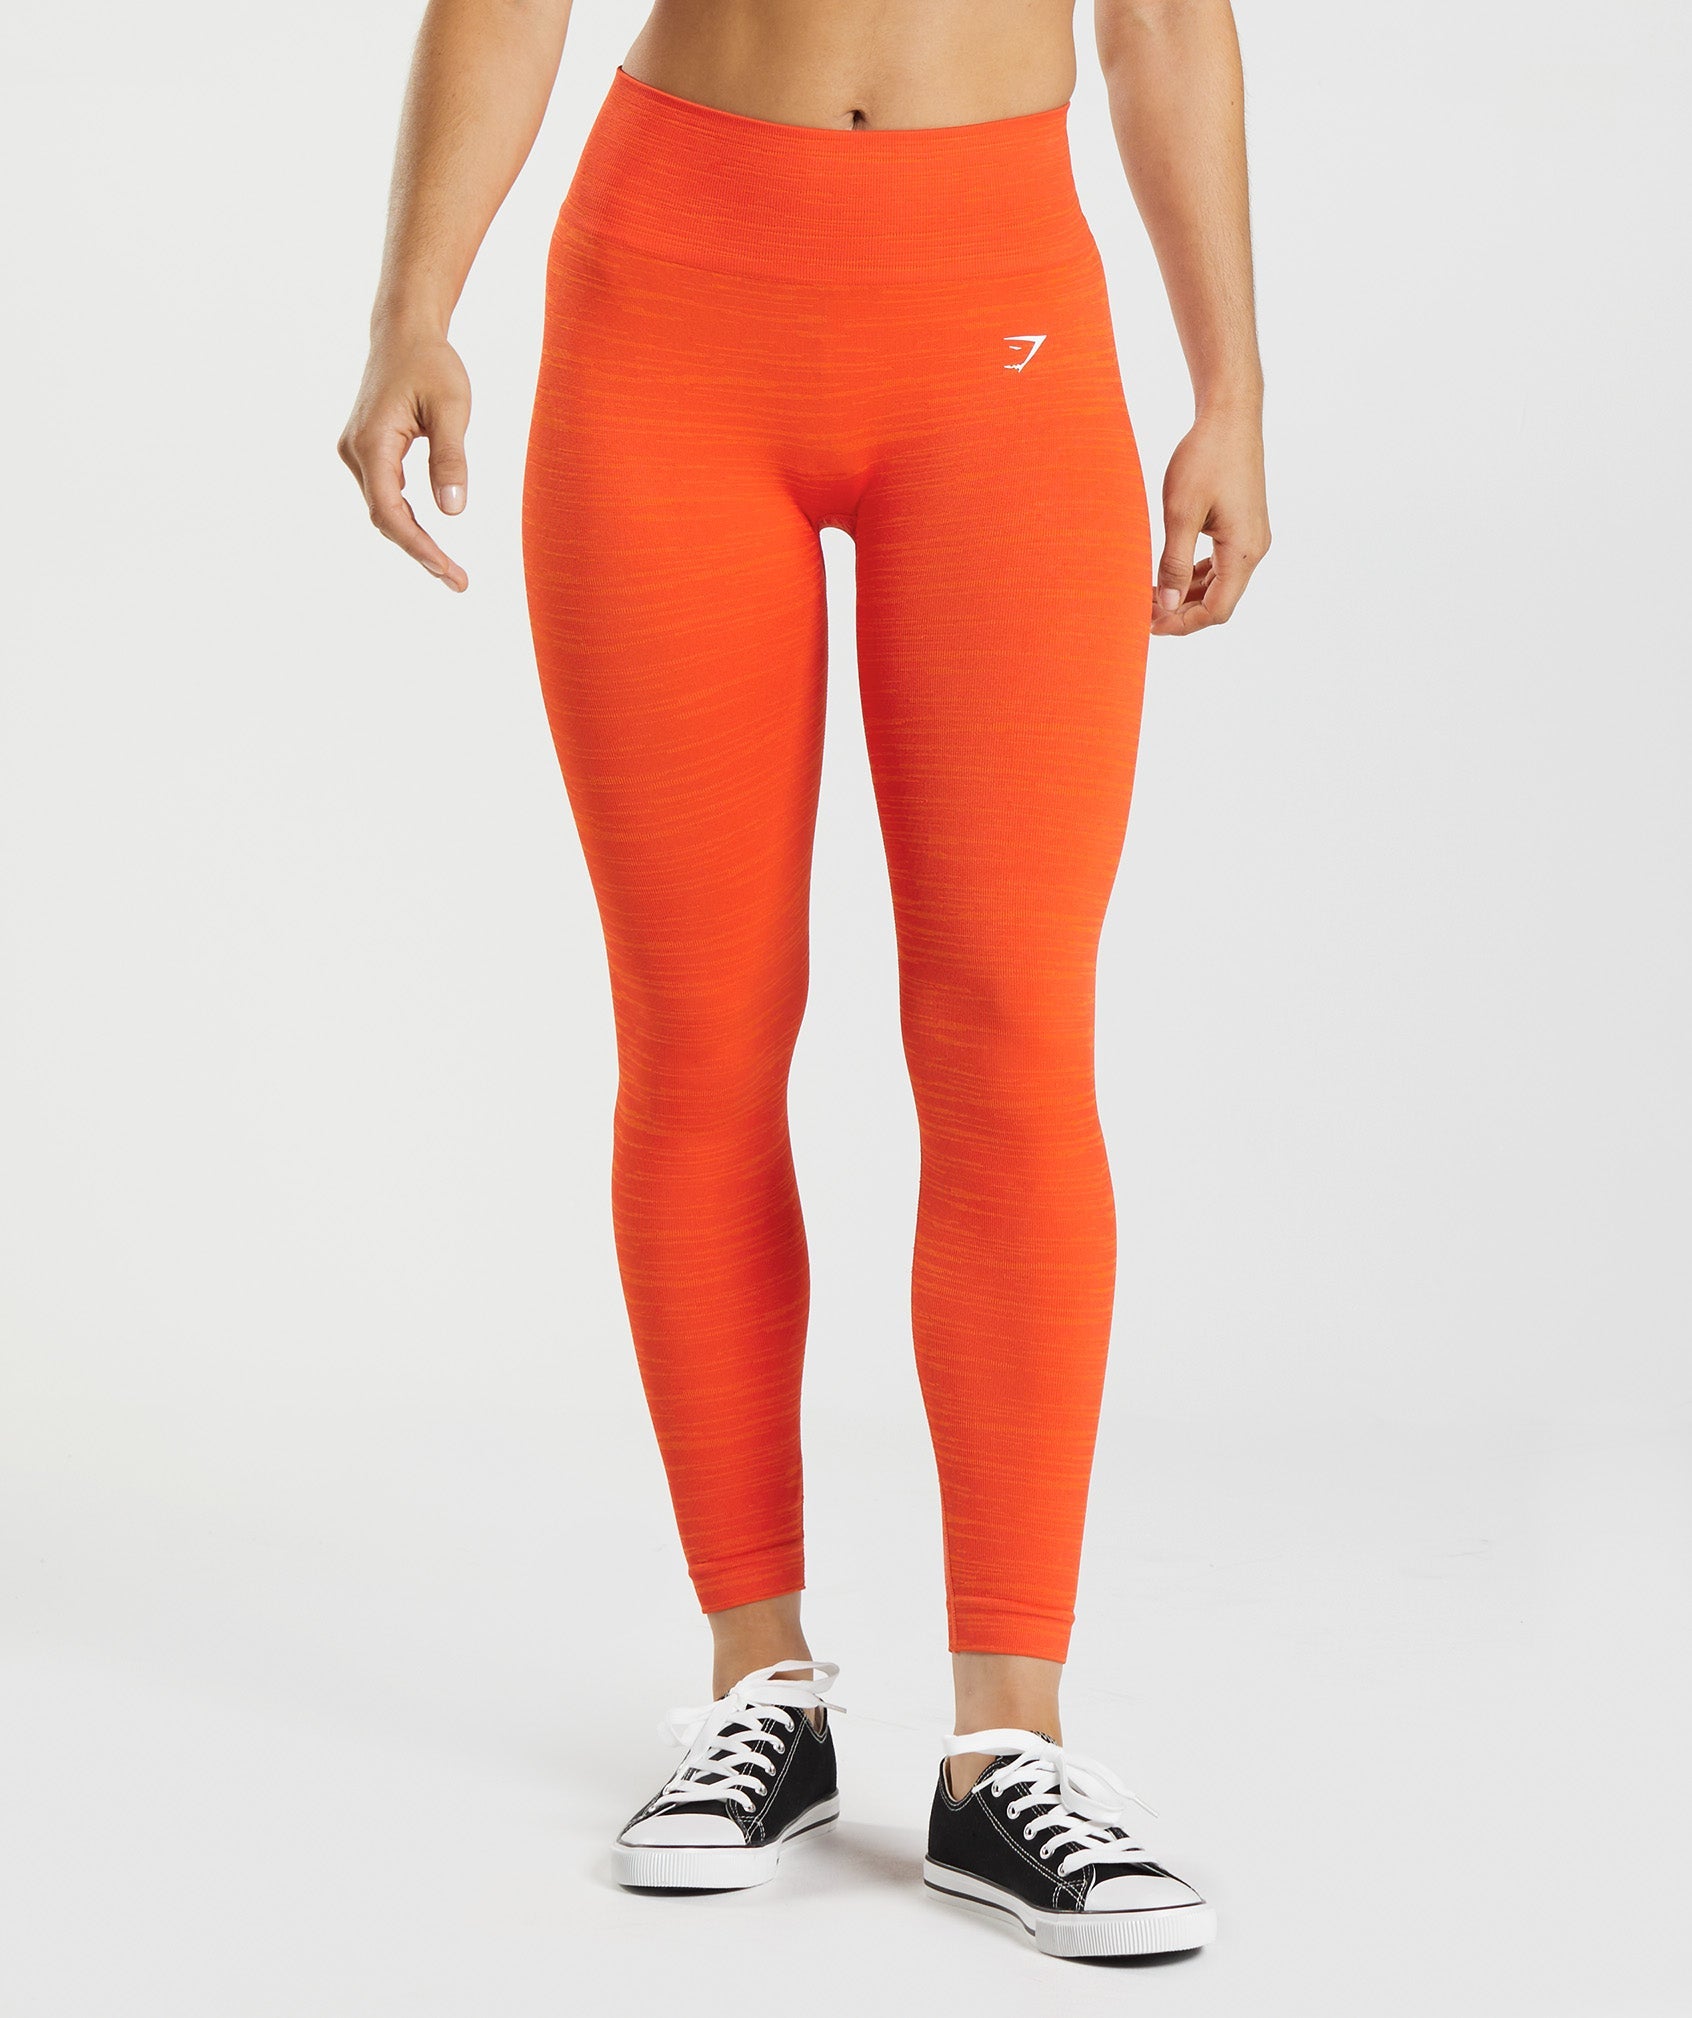 Gymshark Vital Seamless Leggings Orange Size XS - $22 (59% Off